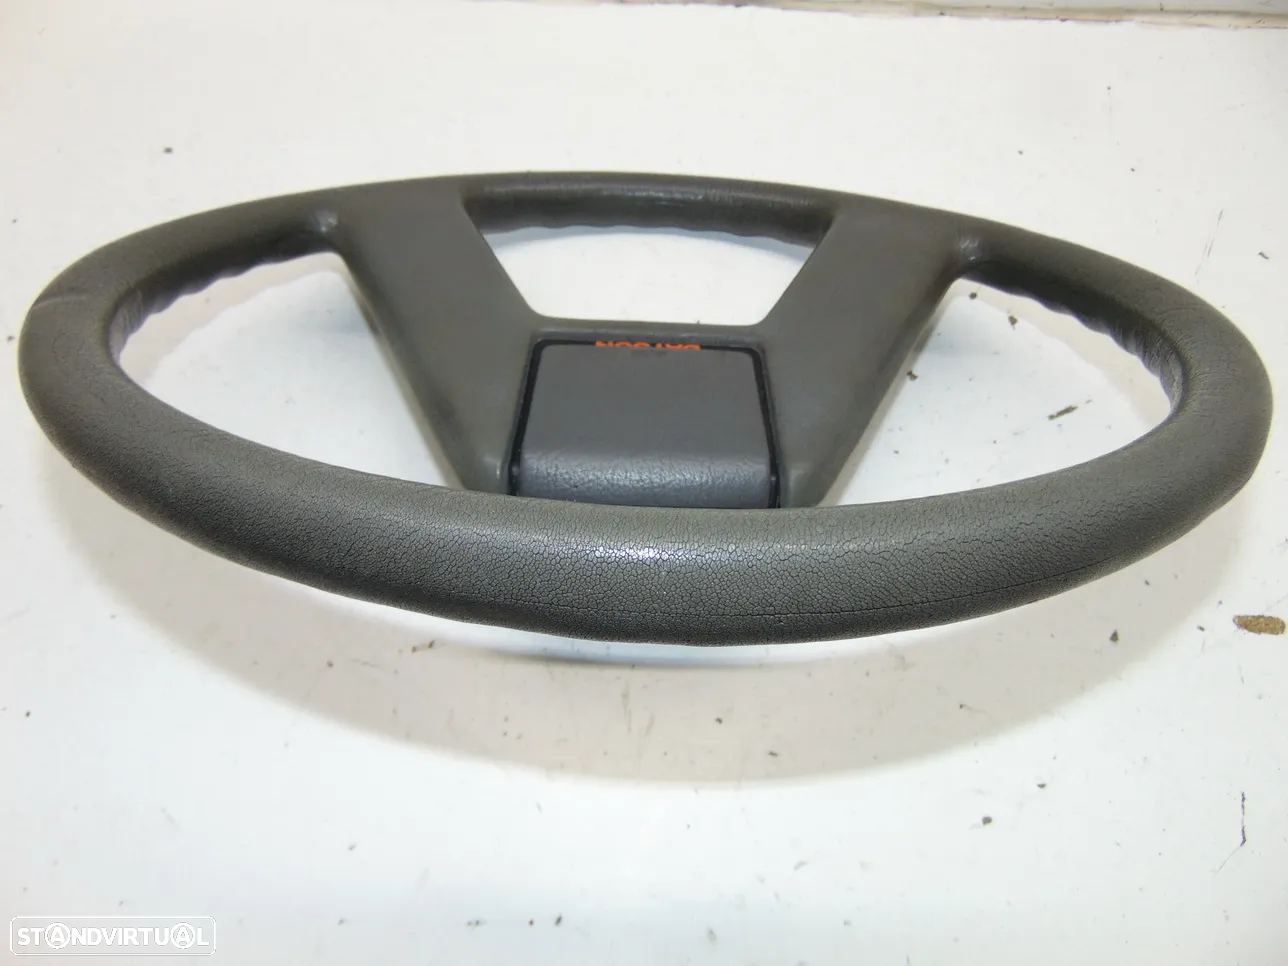 Datsun Stanza coupê volante - 4